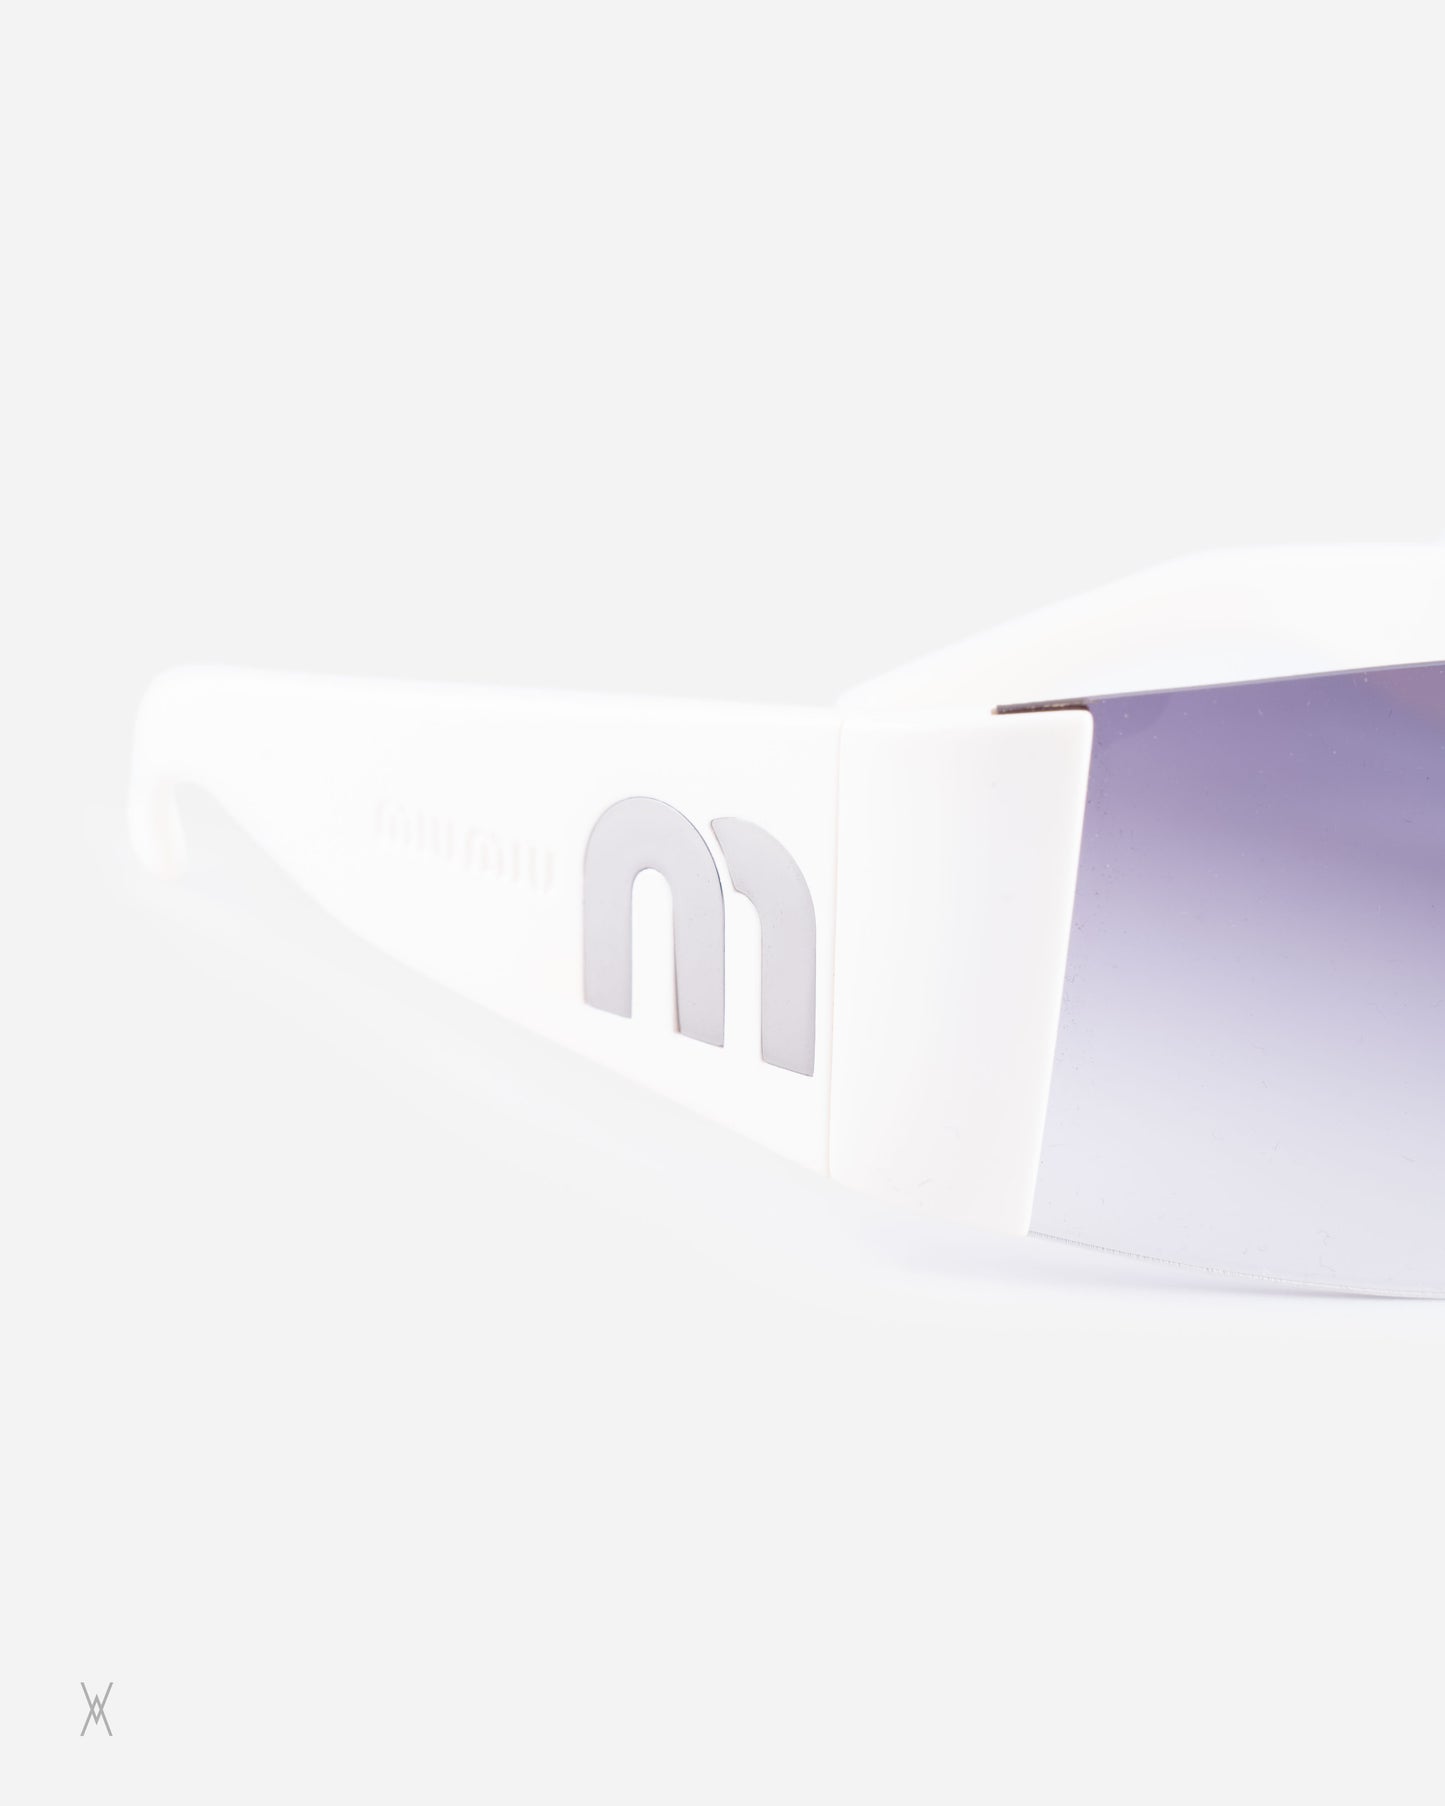 MIU MIU logo shield sunglasses